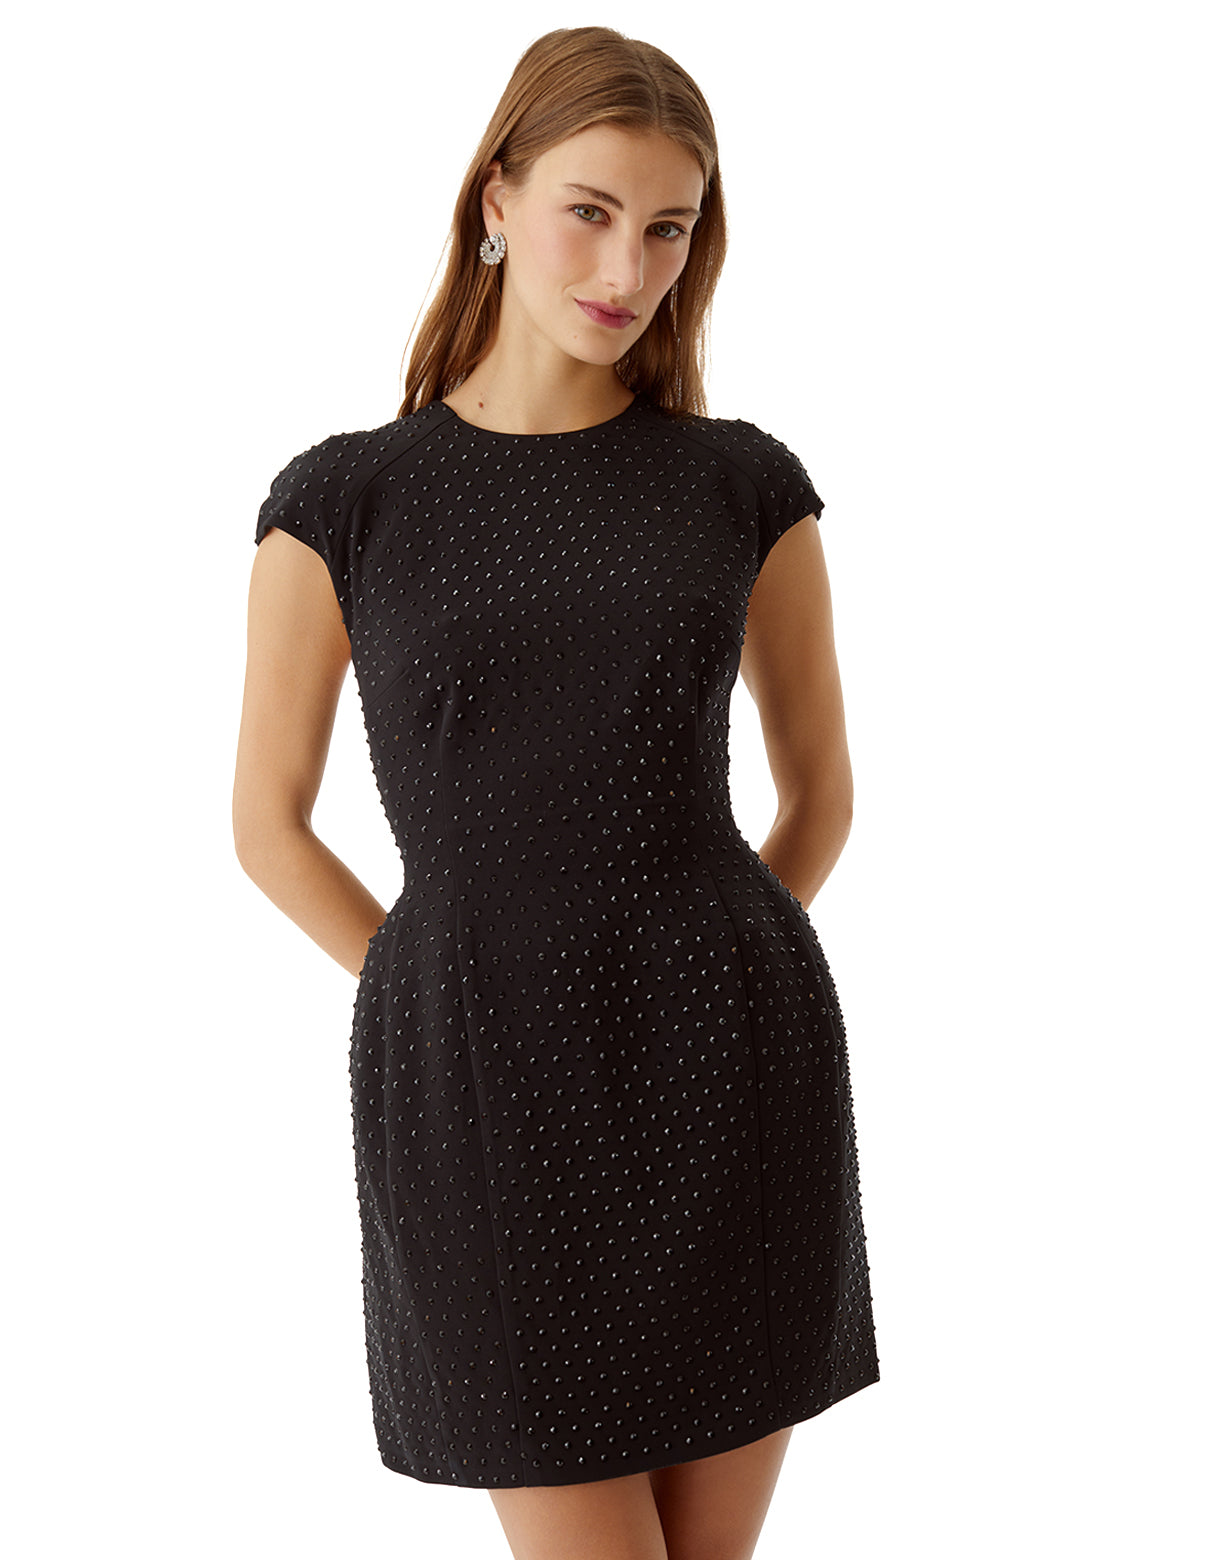 black kristen rhinestone cap sleeve mini dress - women's figure flattering designer date night dresses for fall and winter trends